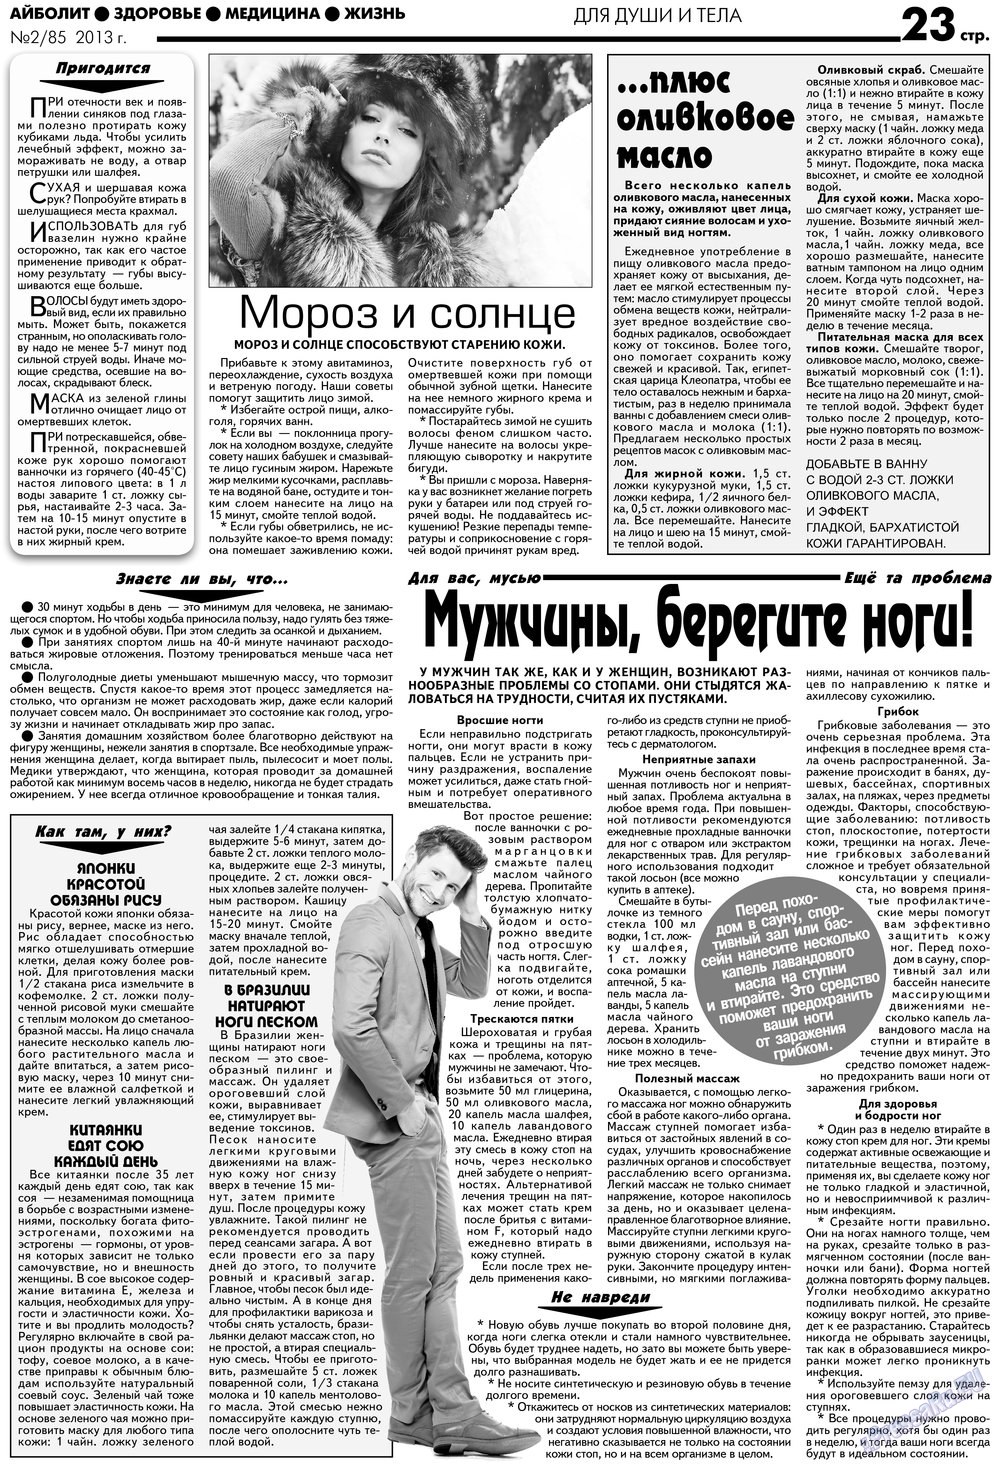 АйБолит (газета). 2013 год, номер 2, стр. 23